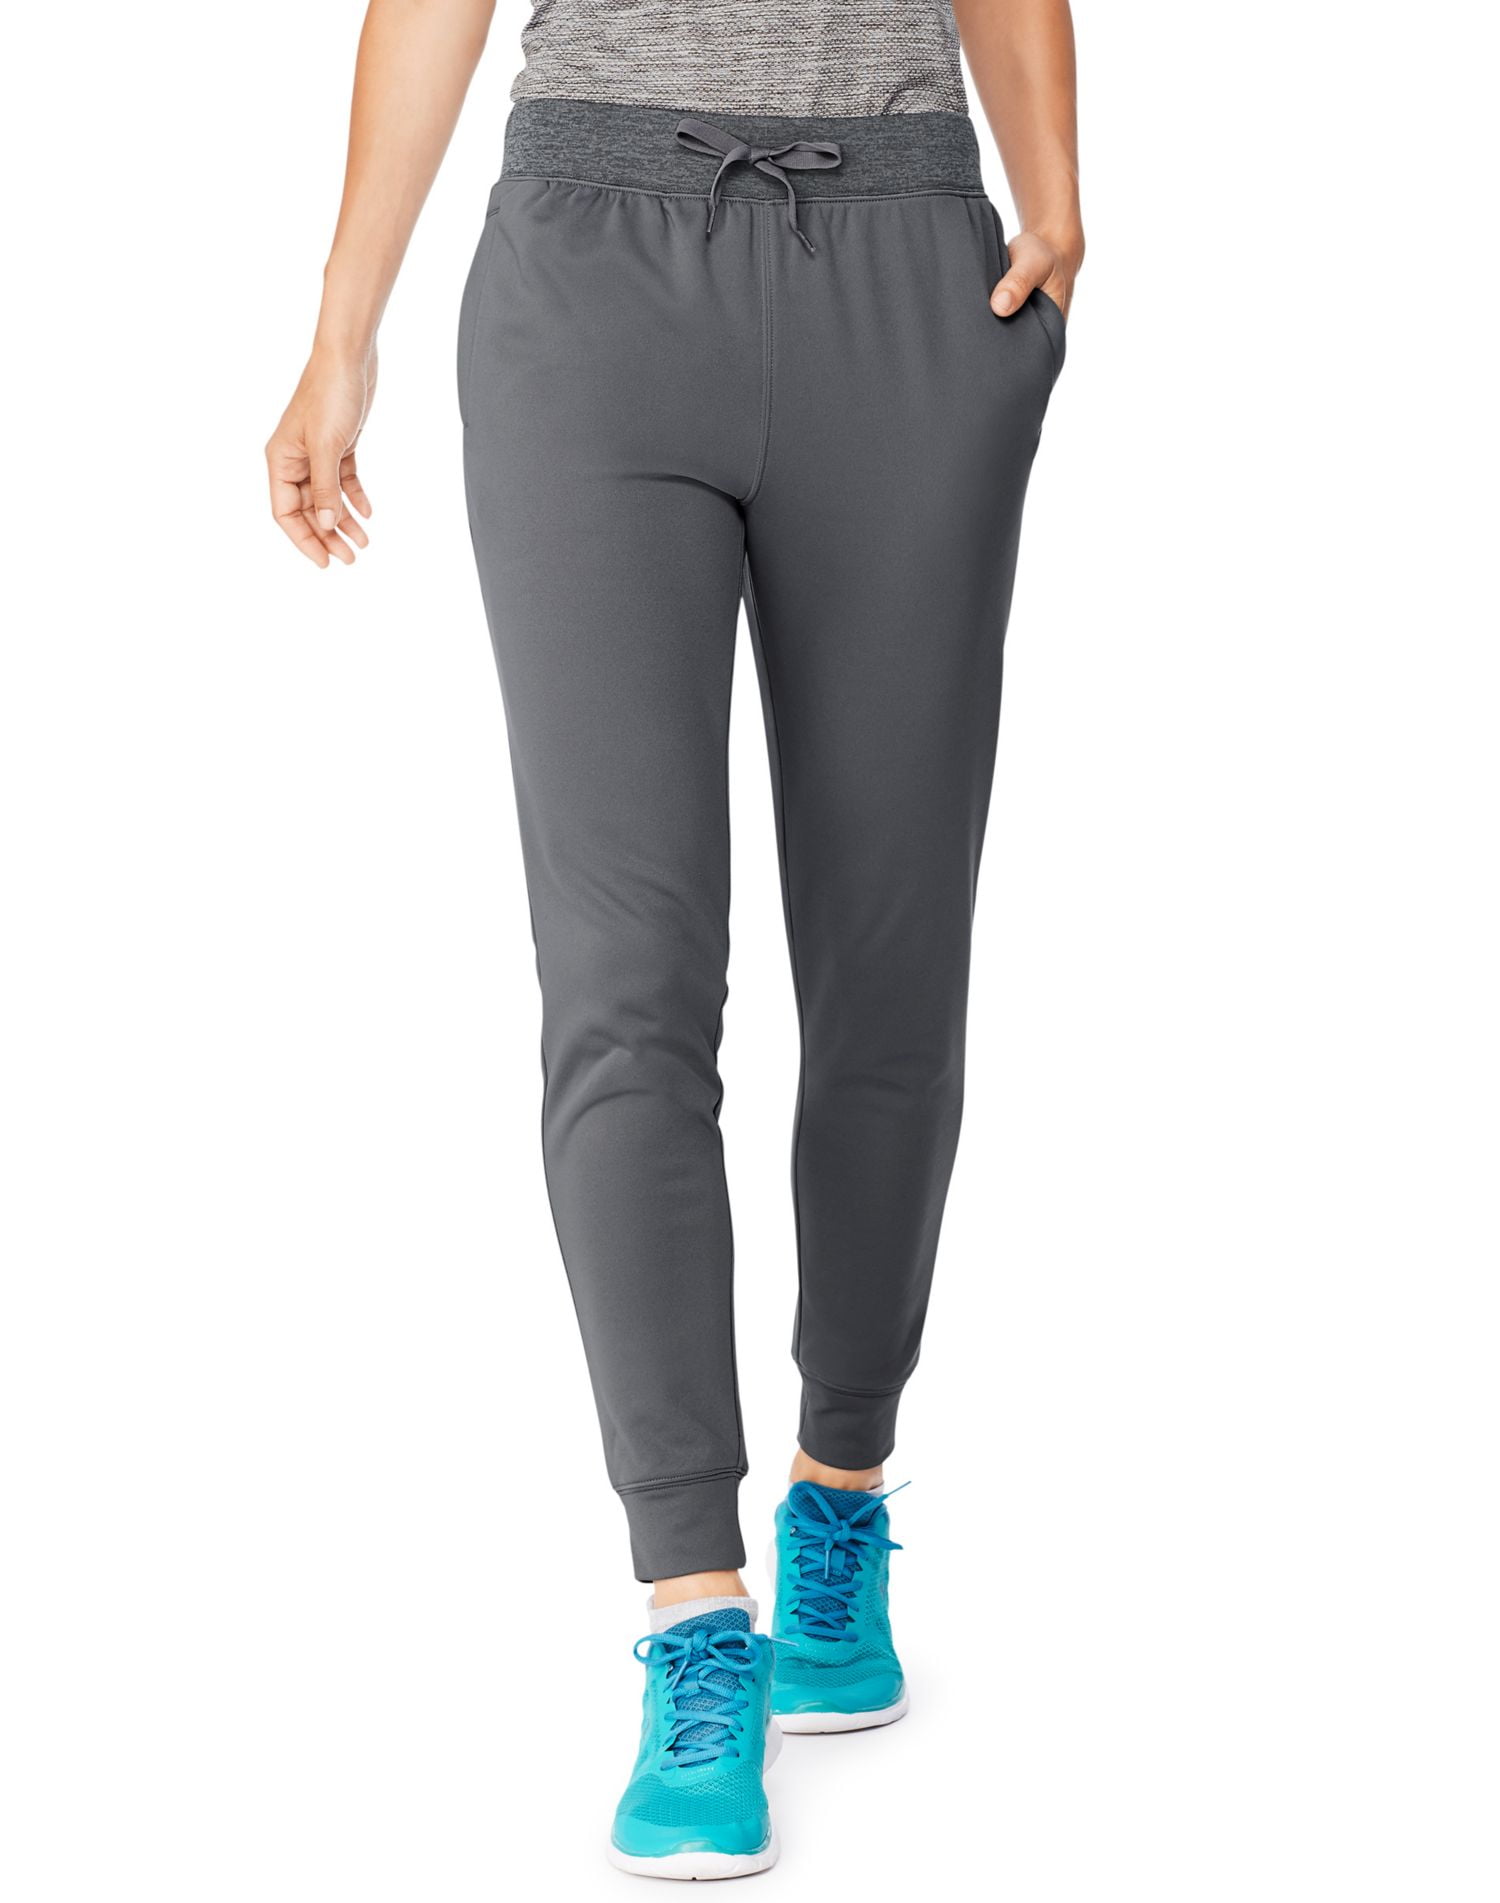 Hanes Sport Women's Performance Fleece Jogger Pants with Pockets -  Walmart.com